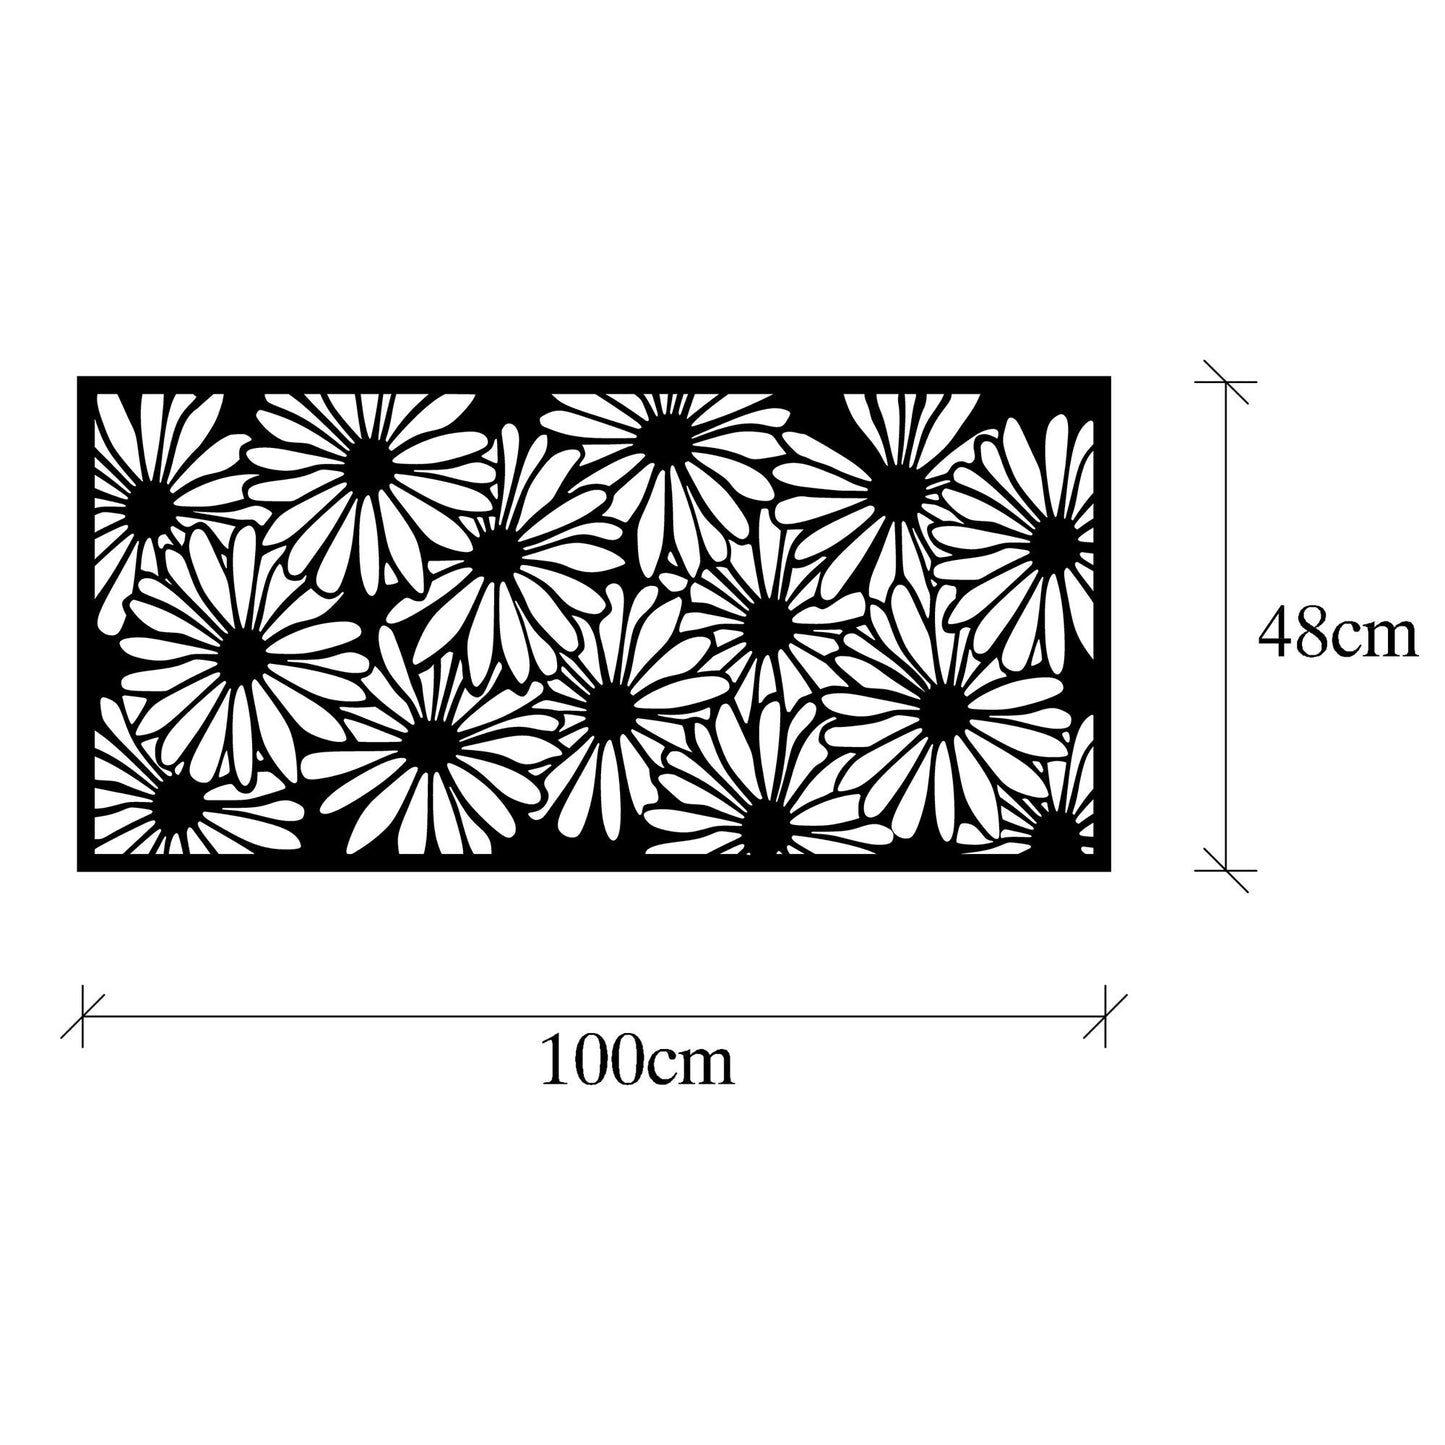 Decorative Panel 3 - Black - Decorative Metal Wall Accessory